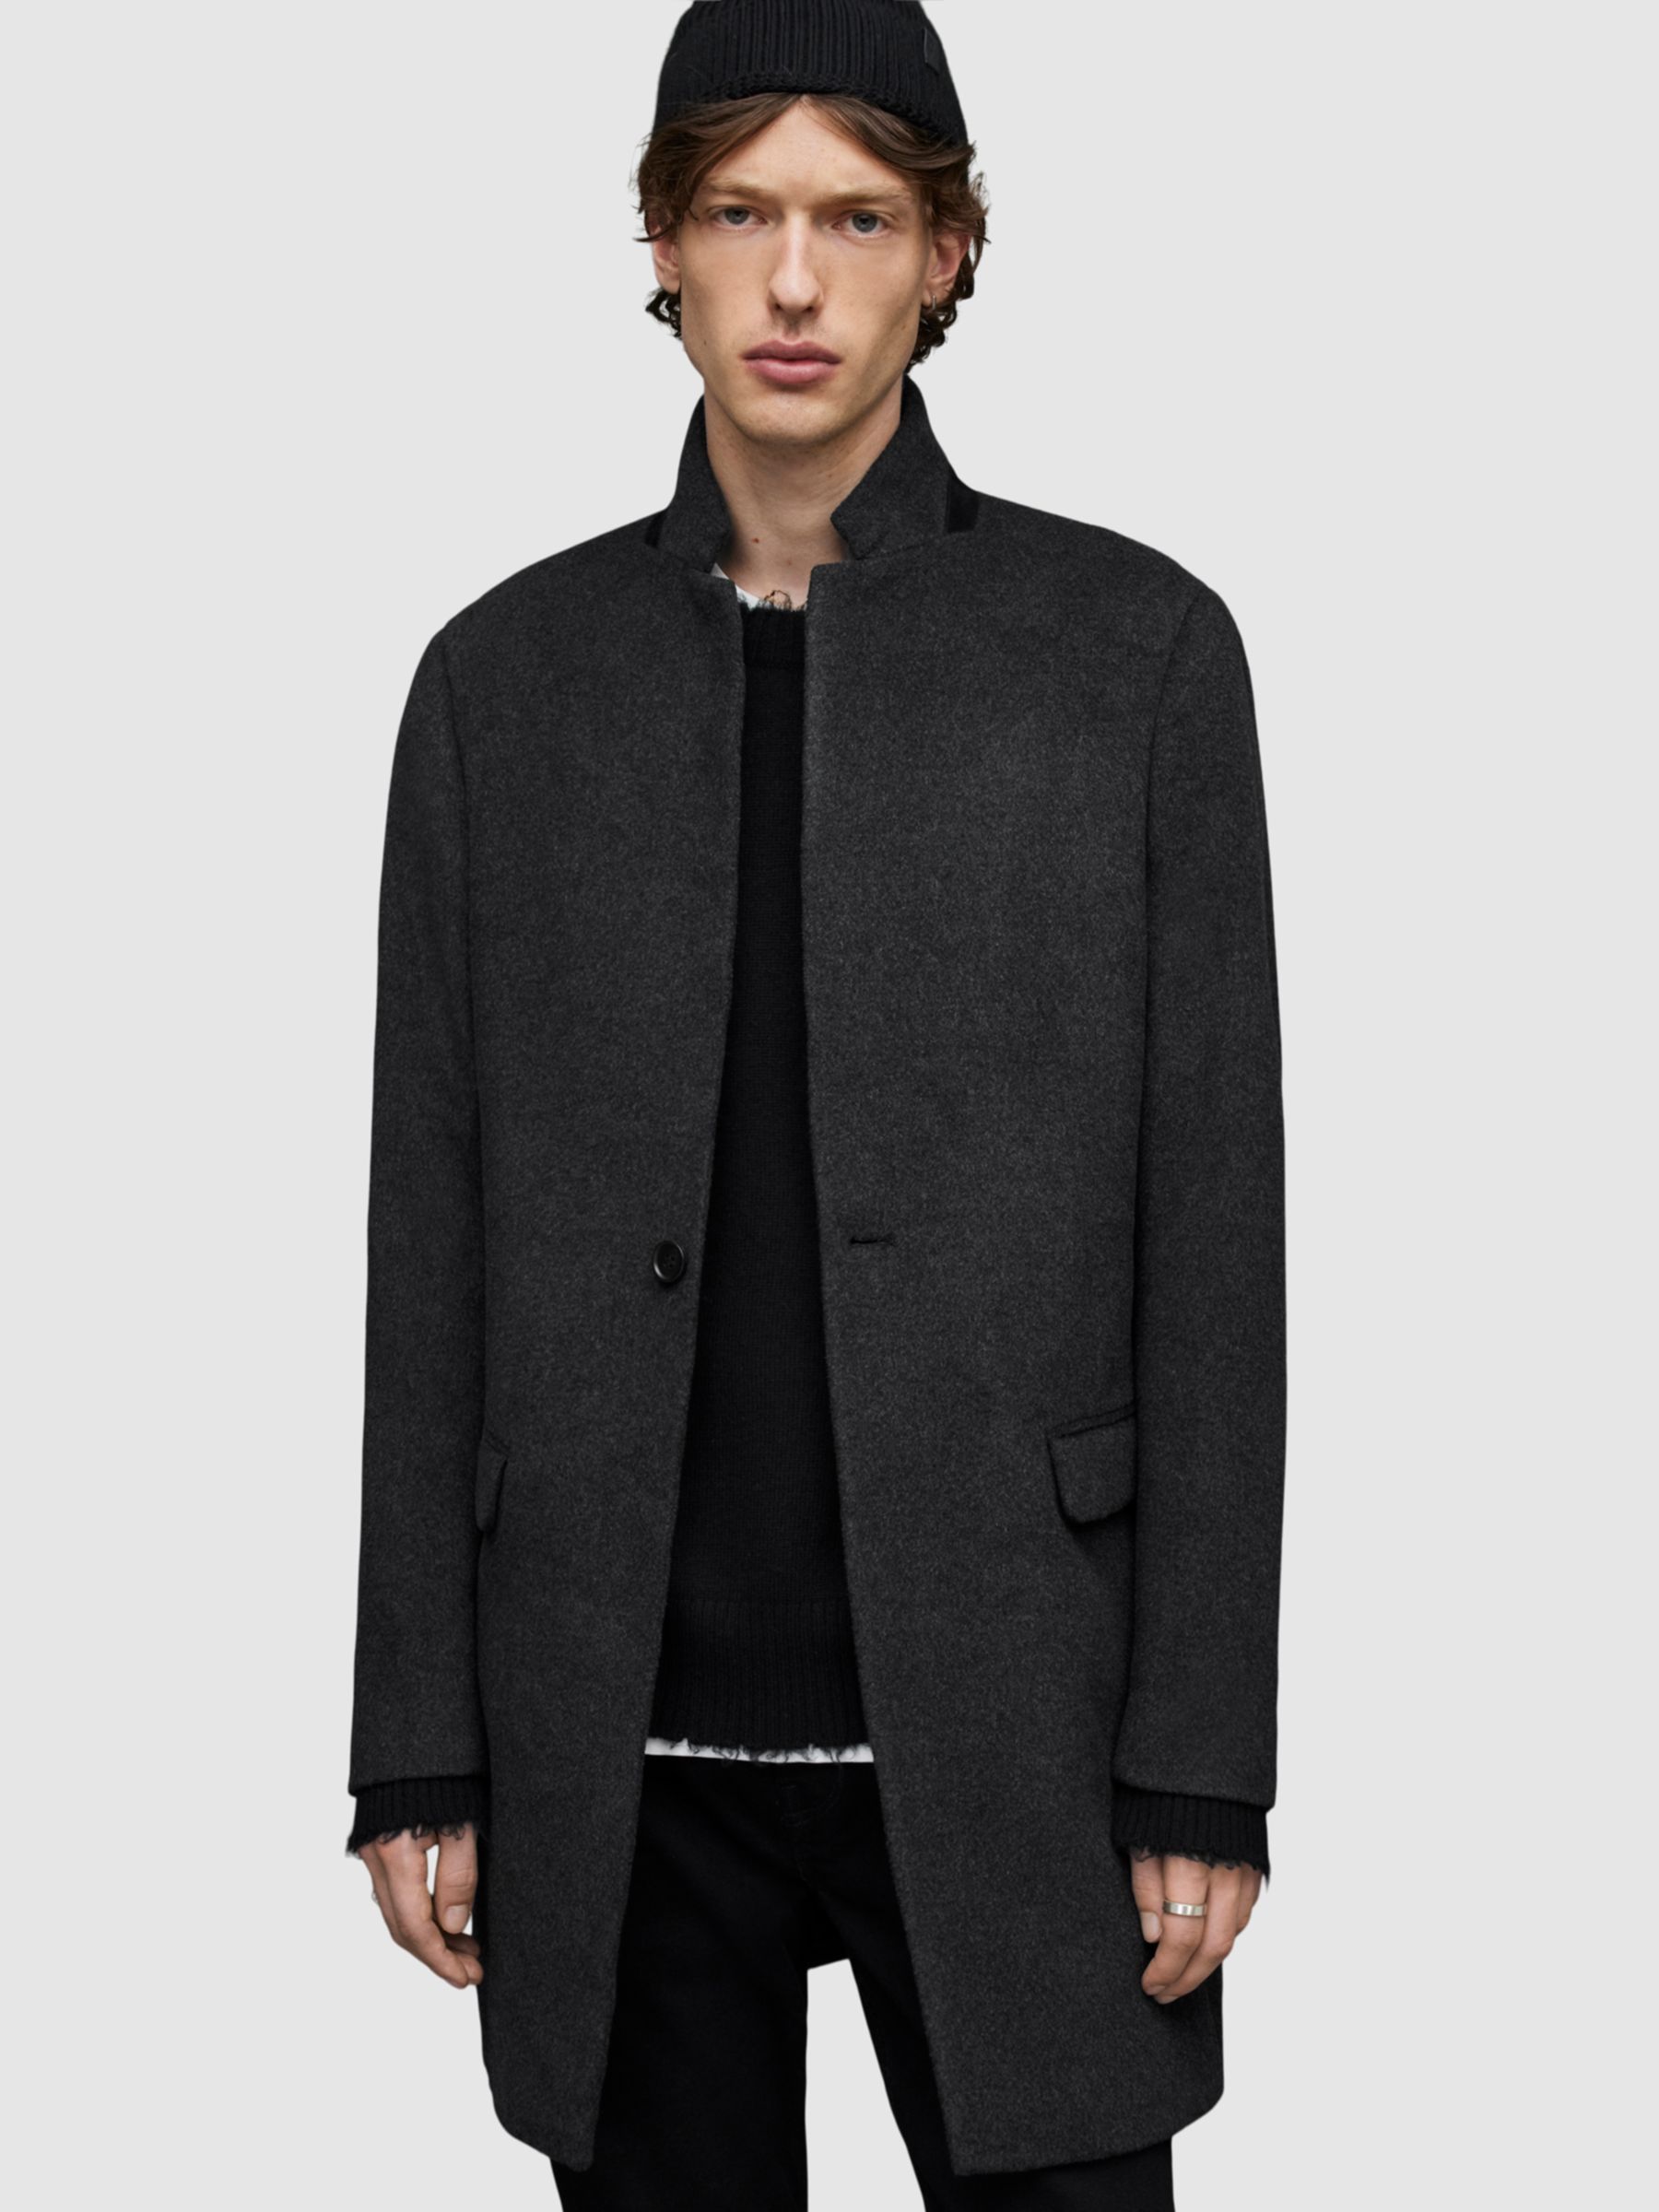 AllSaints Manor Wool Coat, Charcoal Grey at John Lewis & Partners